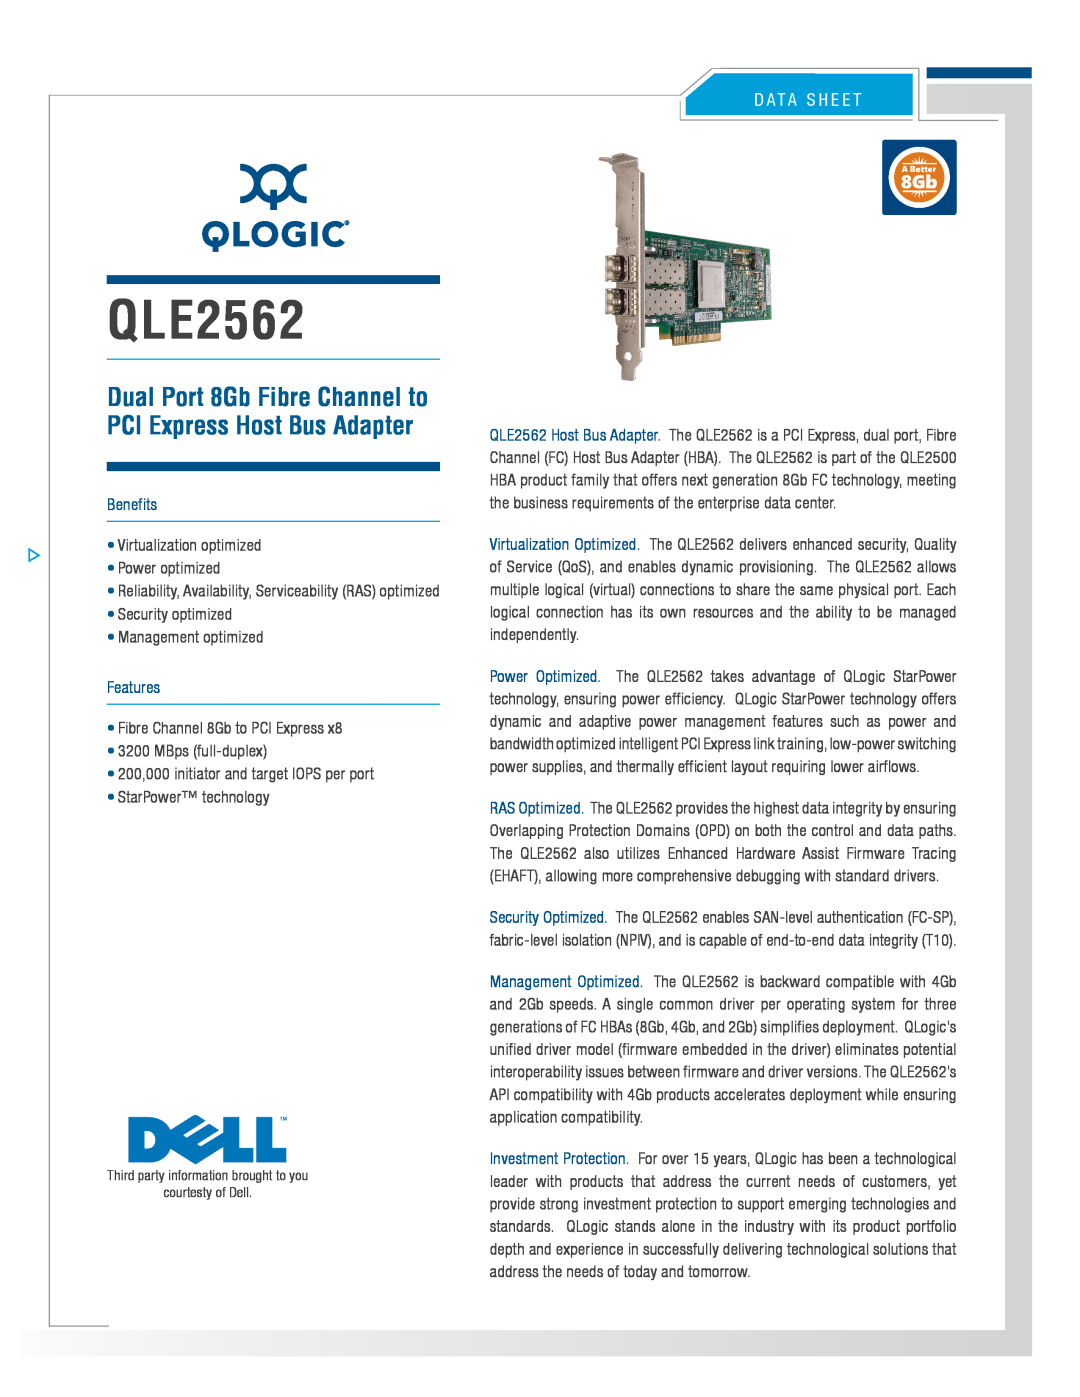 Dell QLE2562 manual Dual Port 8Gb Fibre Channel to PCI Express Host Bus Adapter, Benefits, Features, D A T A S H E E T 